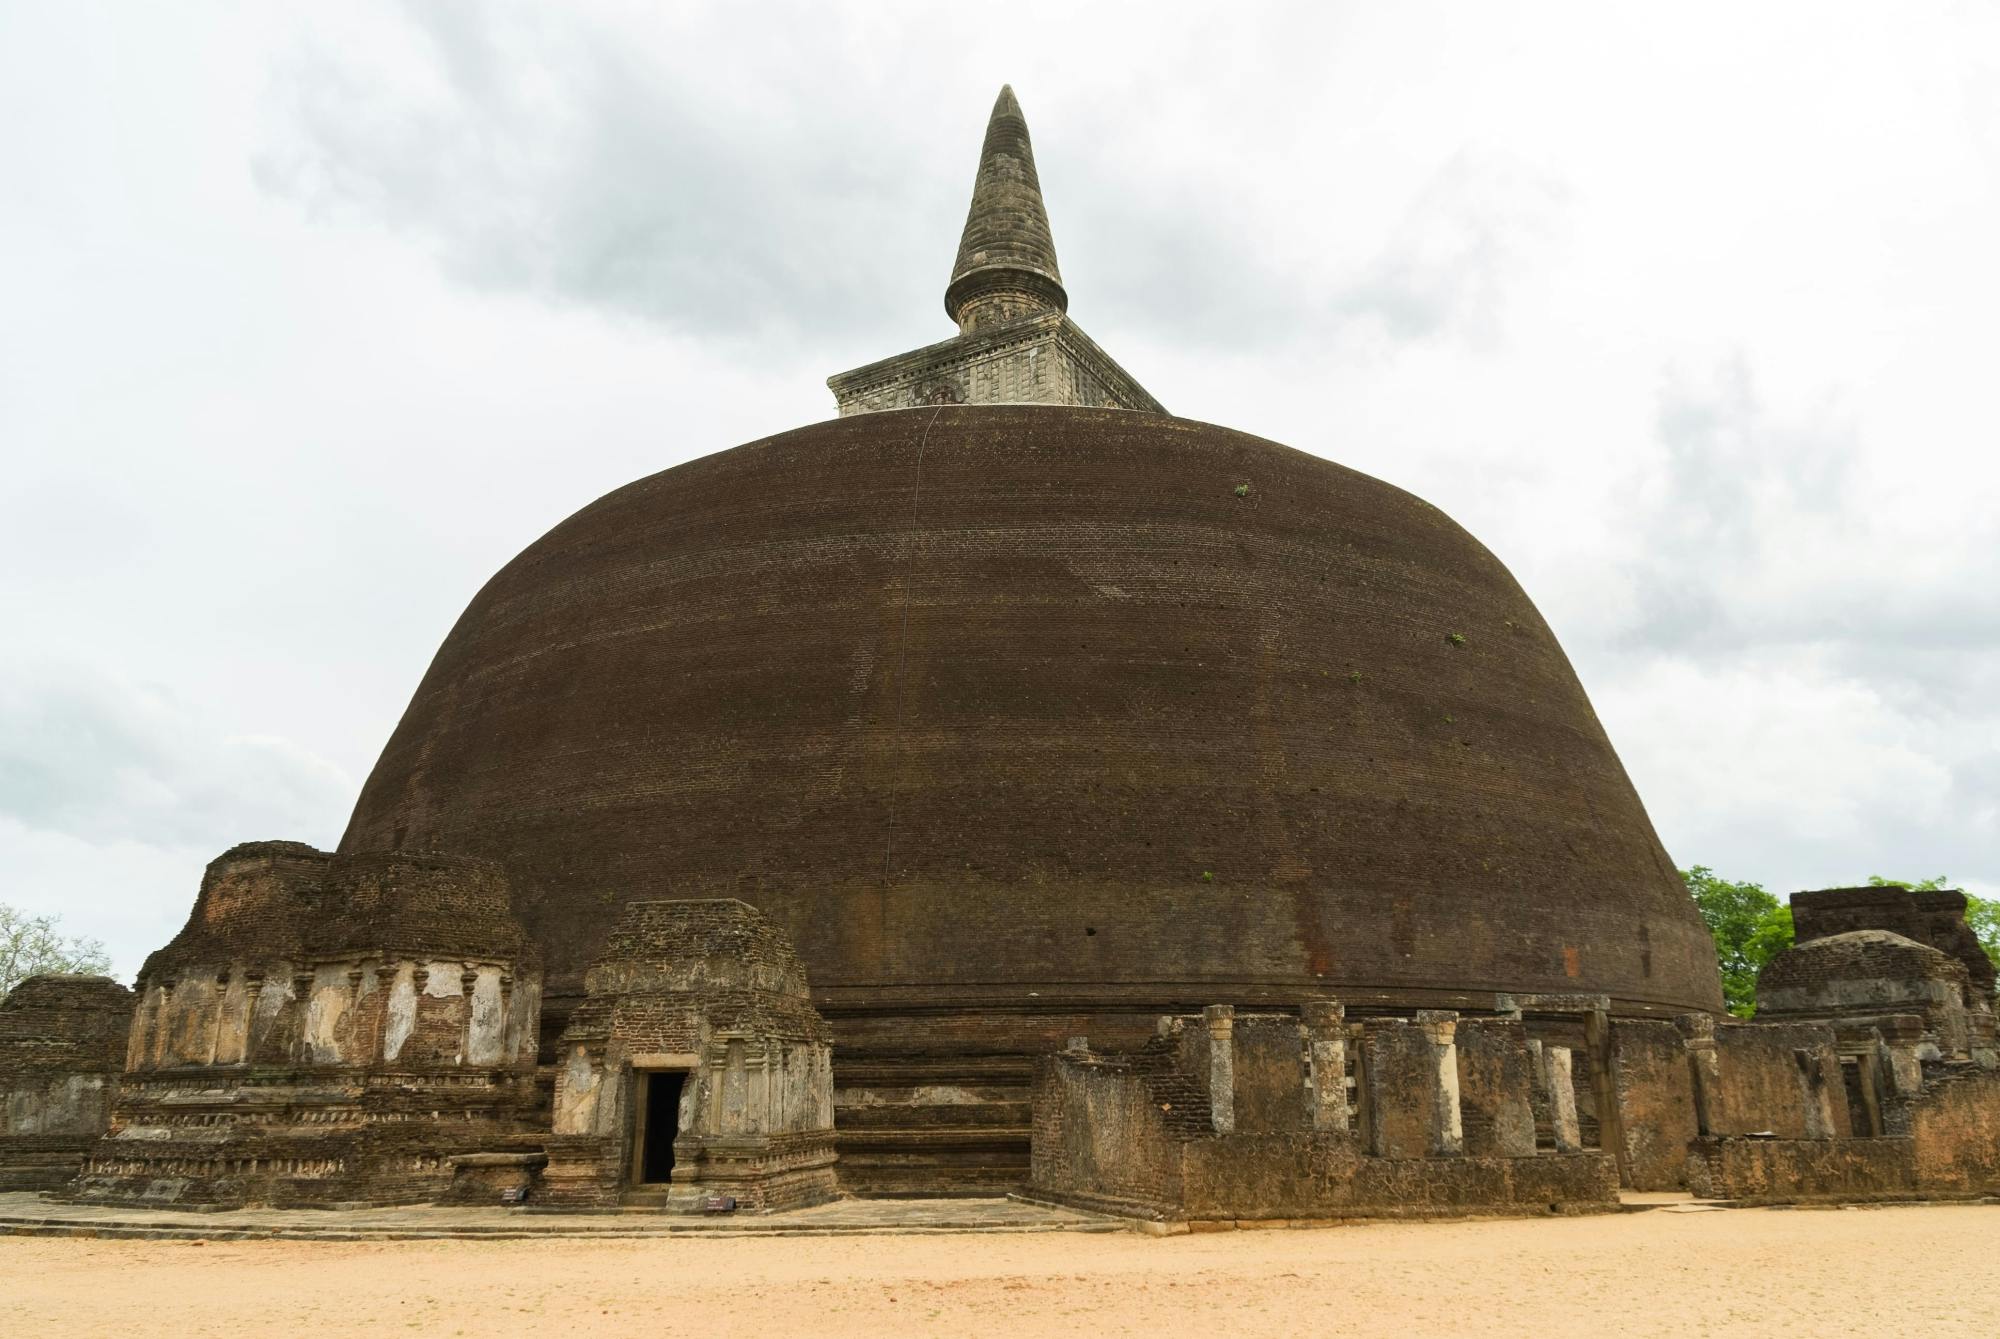 Ancient Polonnaruwa and Minneriya Park Safari Tour from the East Coast